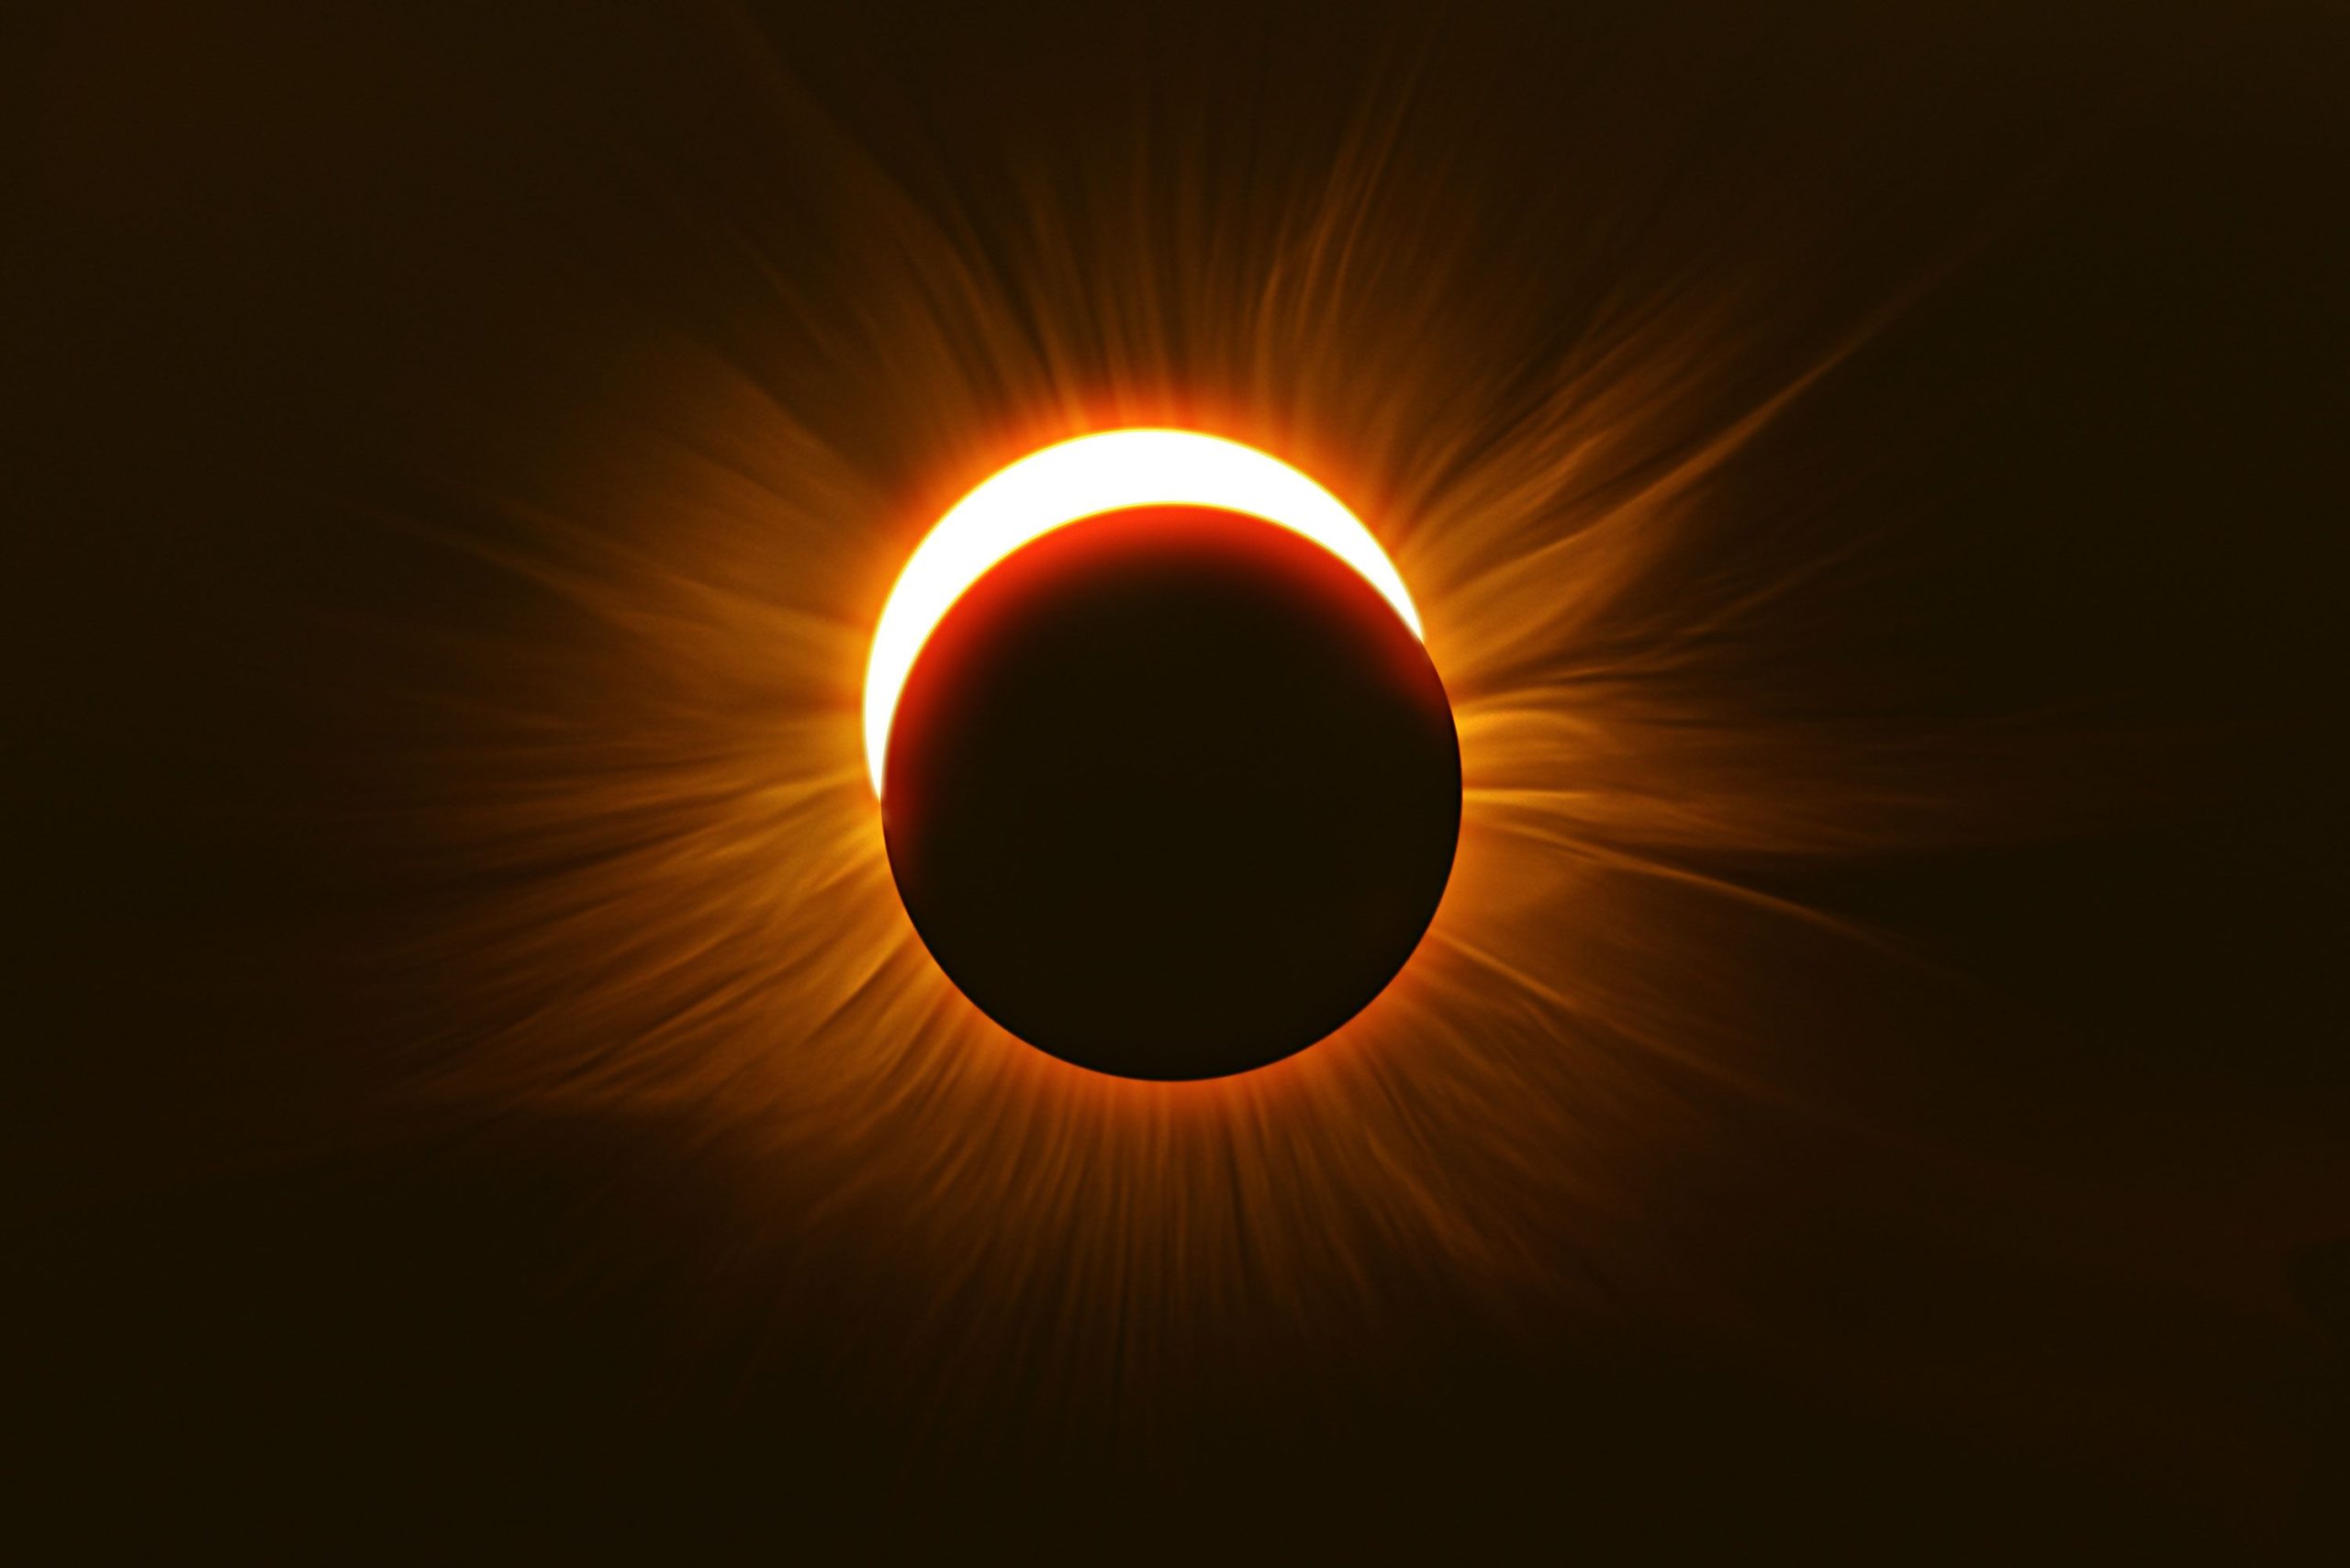 Solar Eclipse 2021 The Annual Solar Eclipse Partial Solar Eclipse